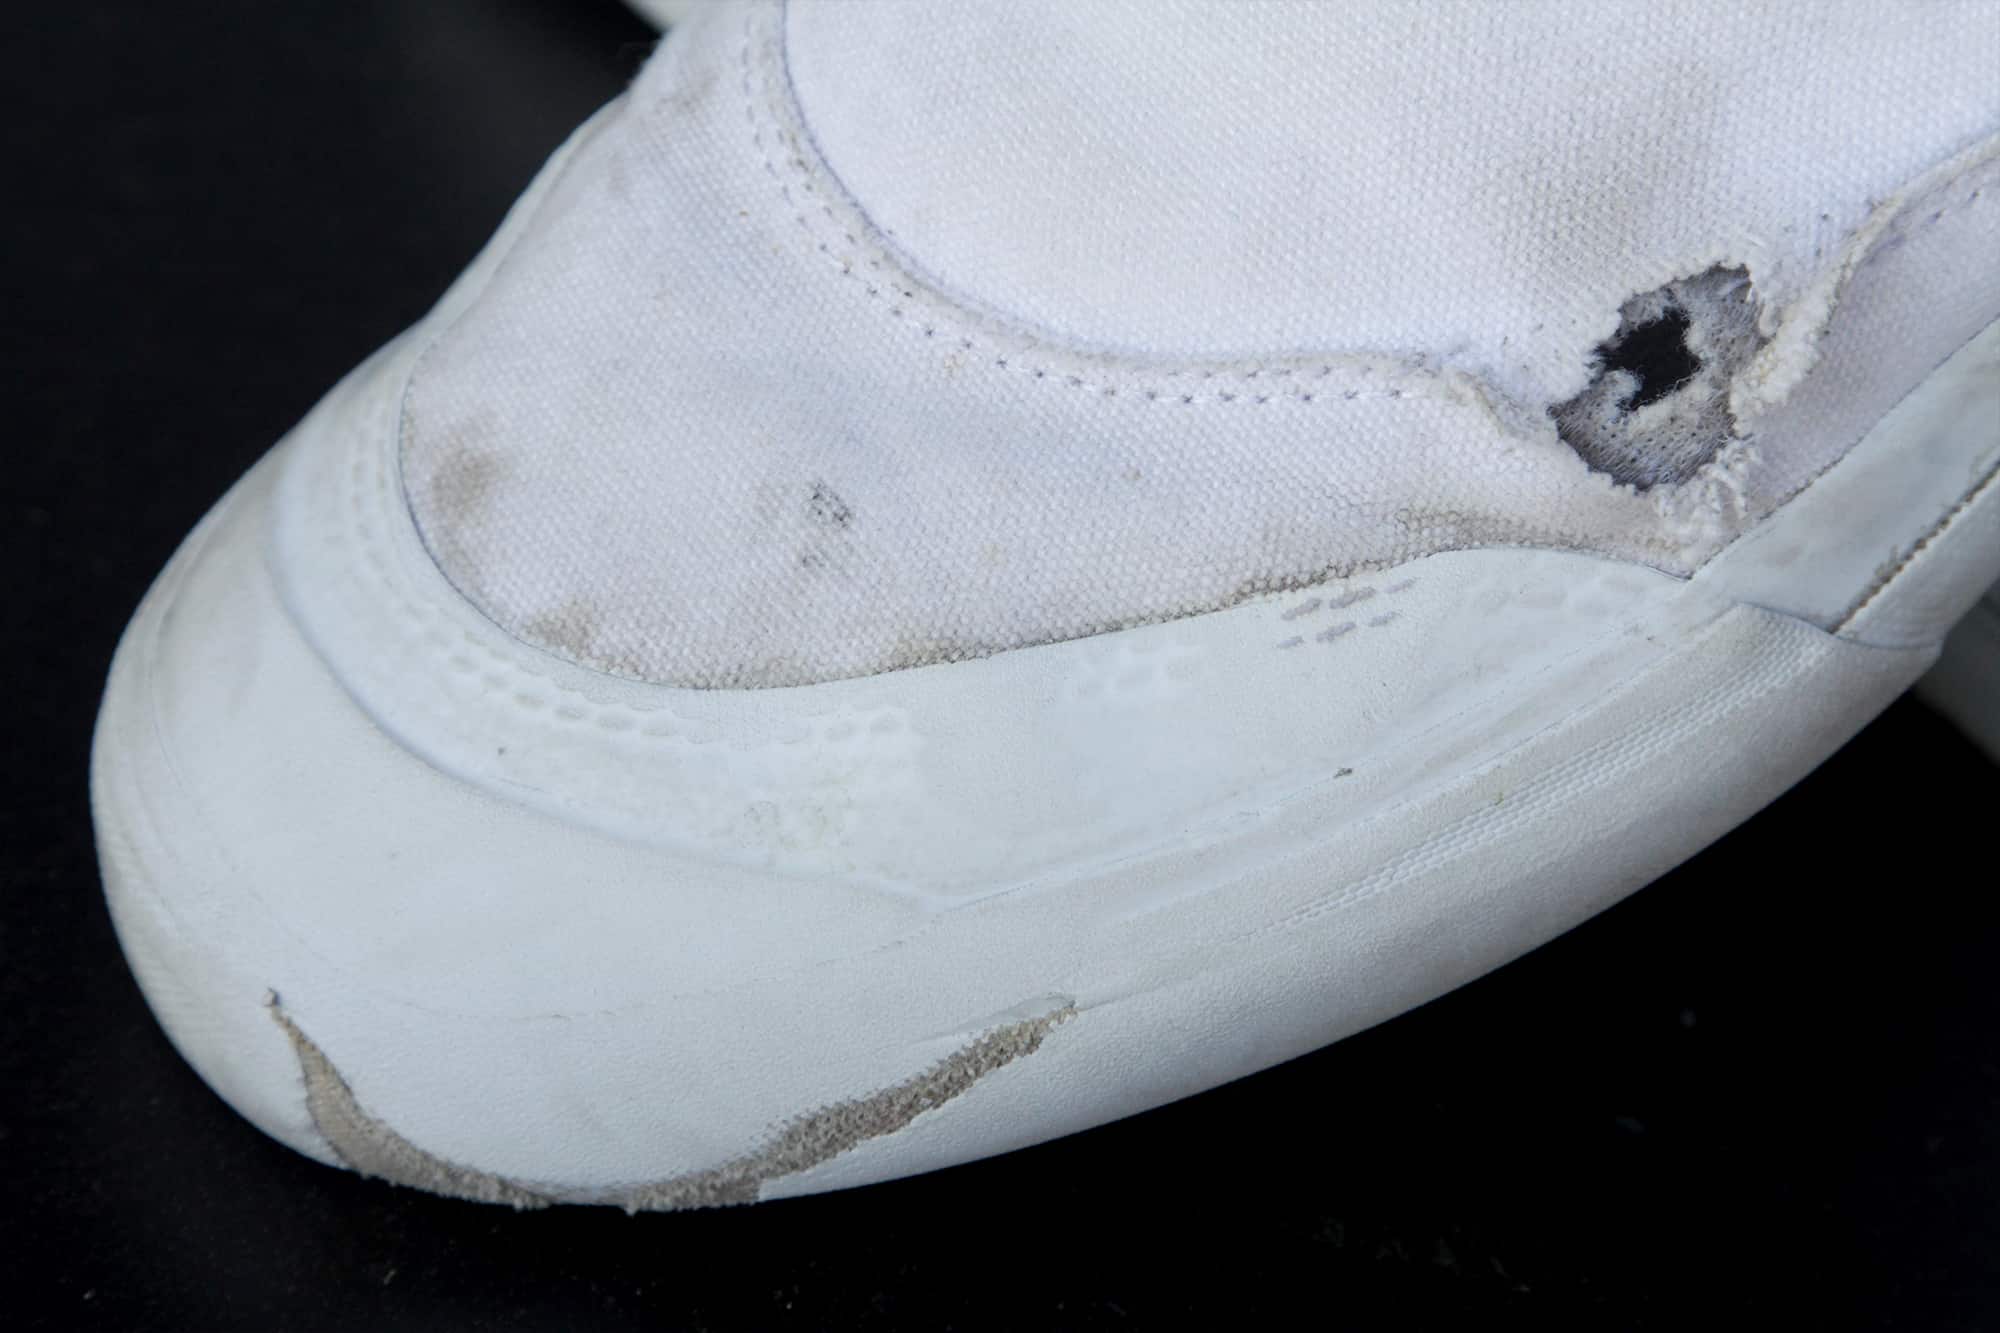 adidas Matchcourt Slip Skate Shoes Wear Test Review | Tactics